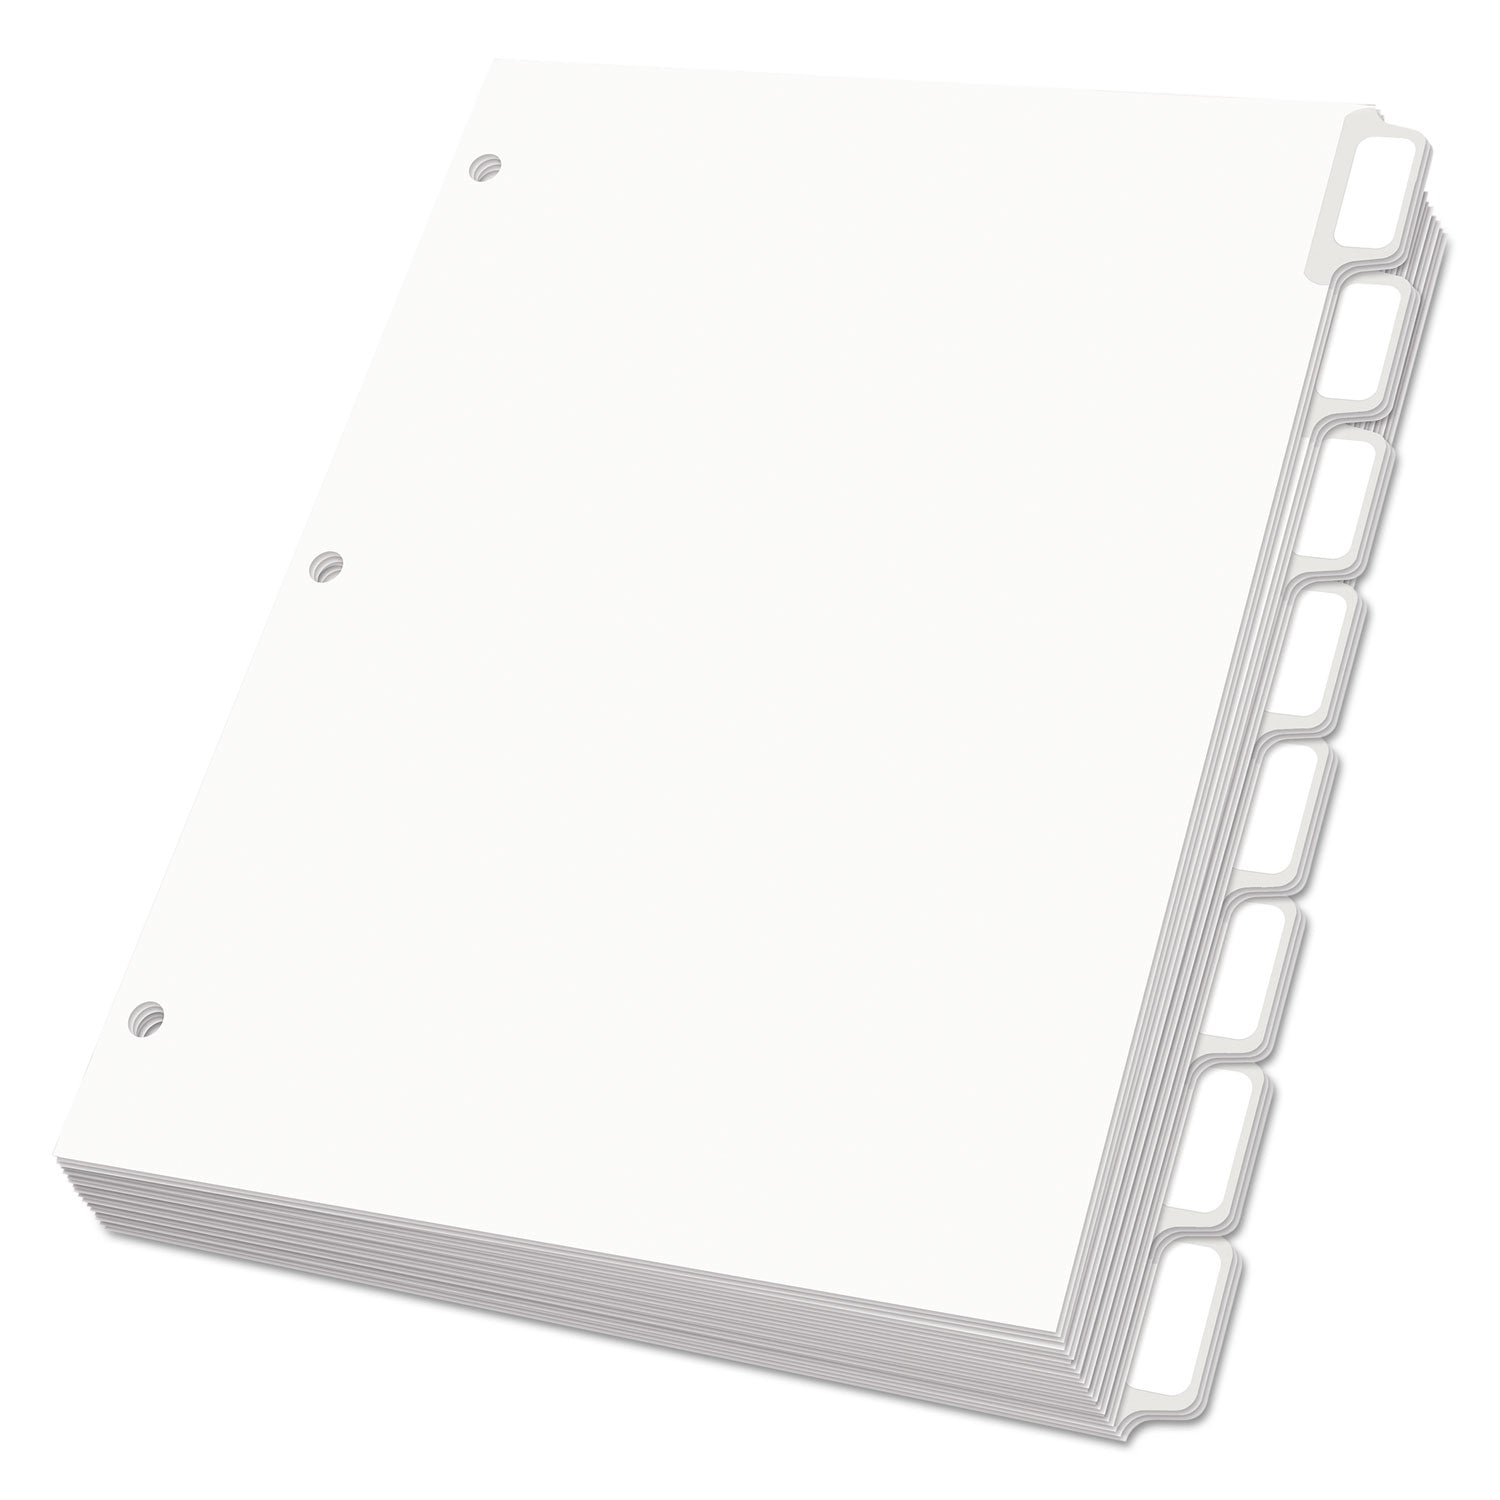 Custom Label Tab Dividers with Self-Adhesive Tab Labels, 8-Tab, 11 x 8.5, White, 25 Sets - 